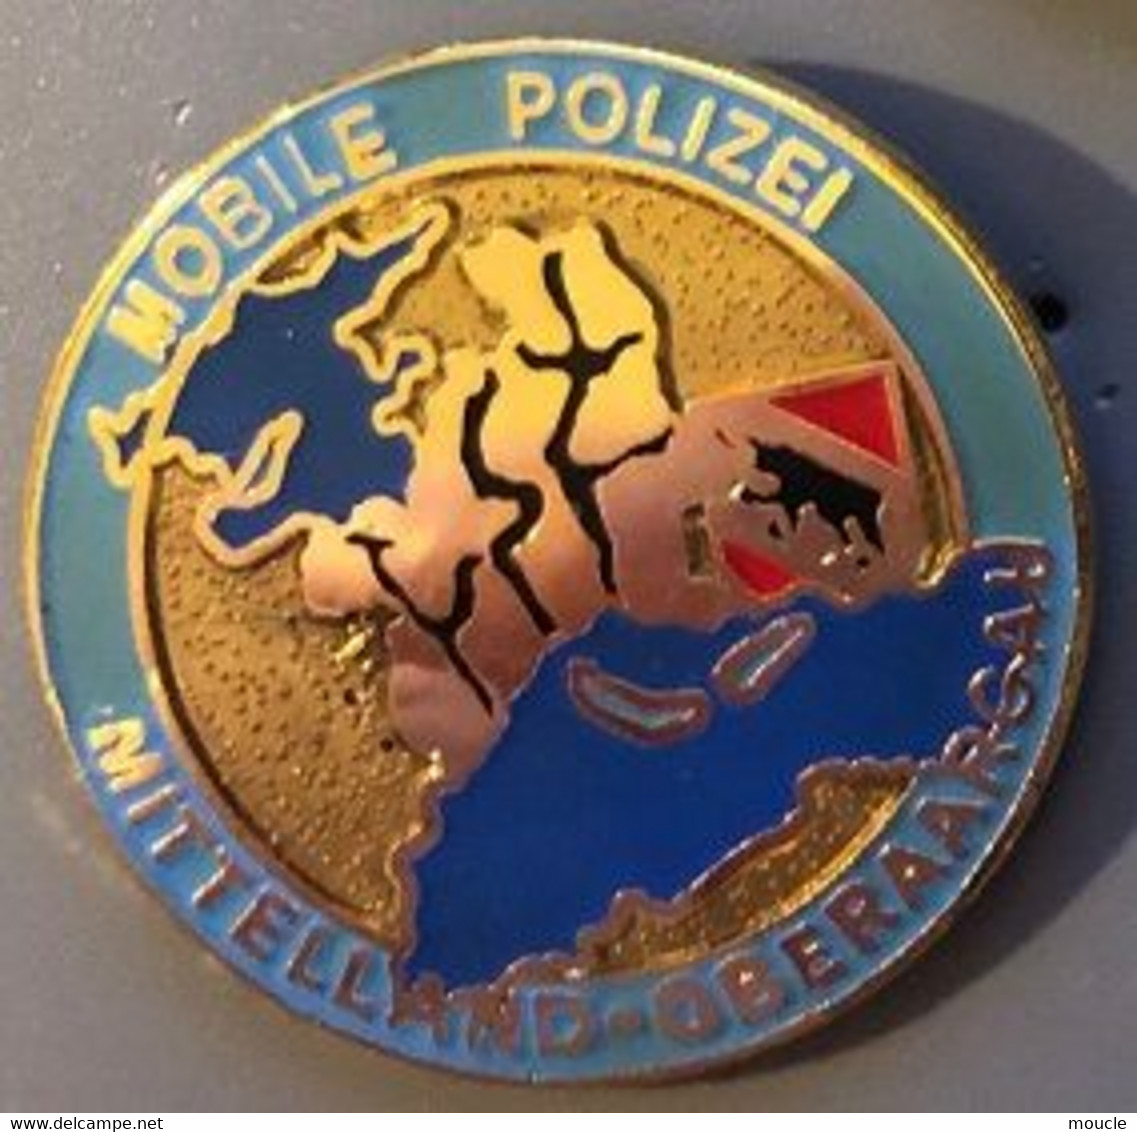 MOBILE POLIZEI - POLICE CANTON DE BERNE - MITTELLAND OBER  AARGAU - SCHWEIZ - POLICA - SVIZZERA - OURS - BÄR -  (29) - Policia